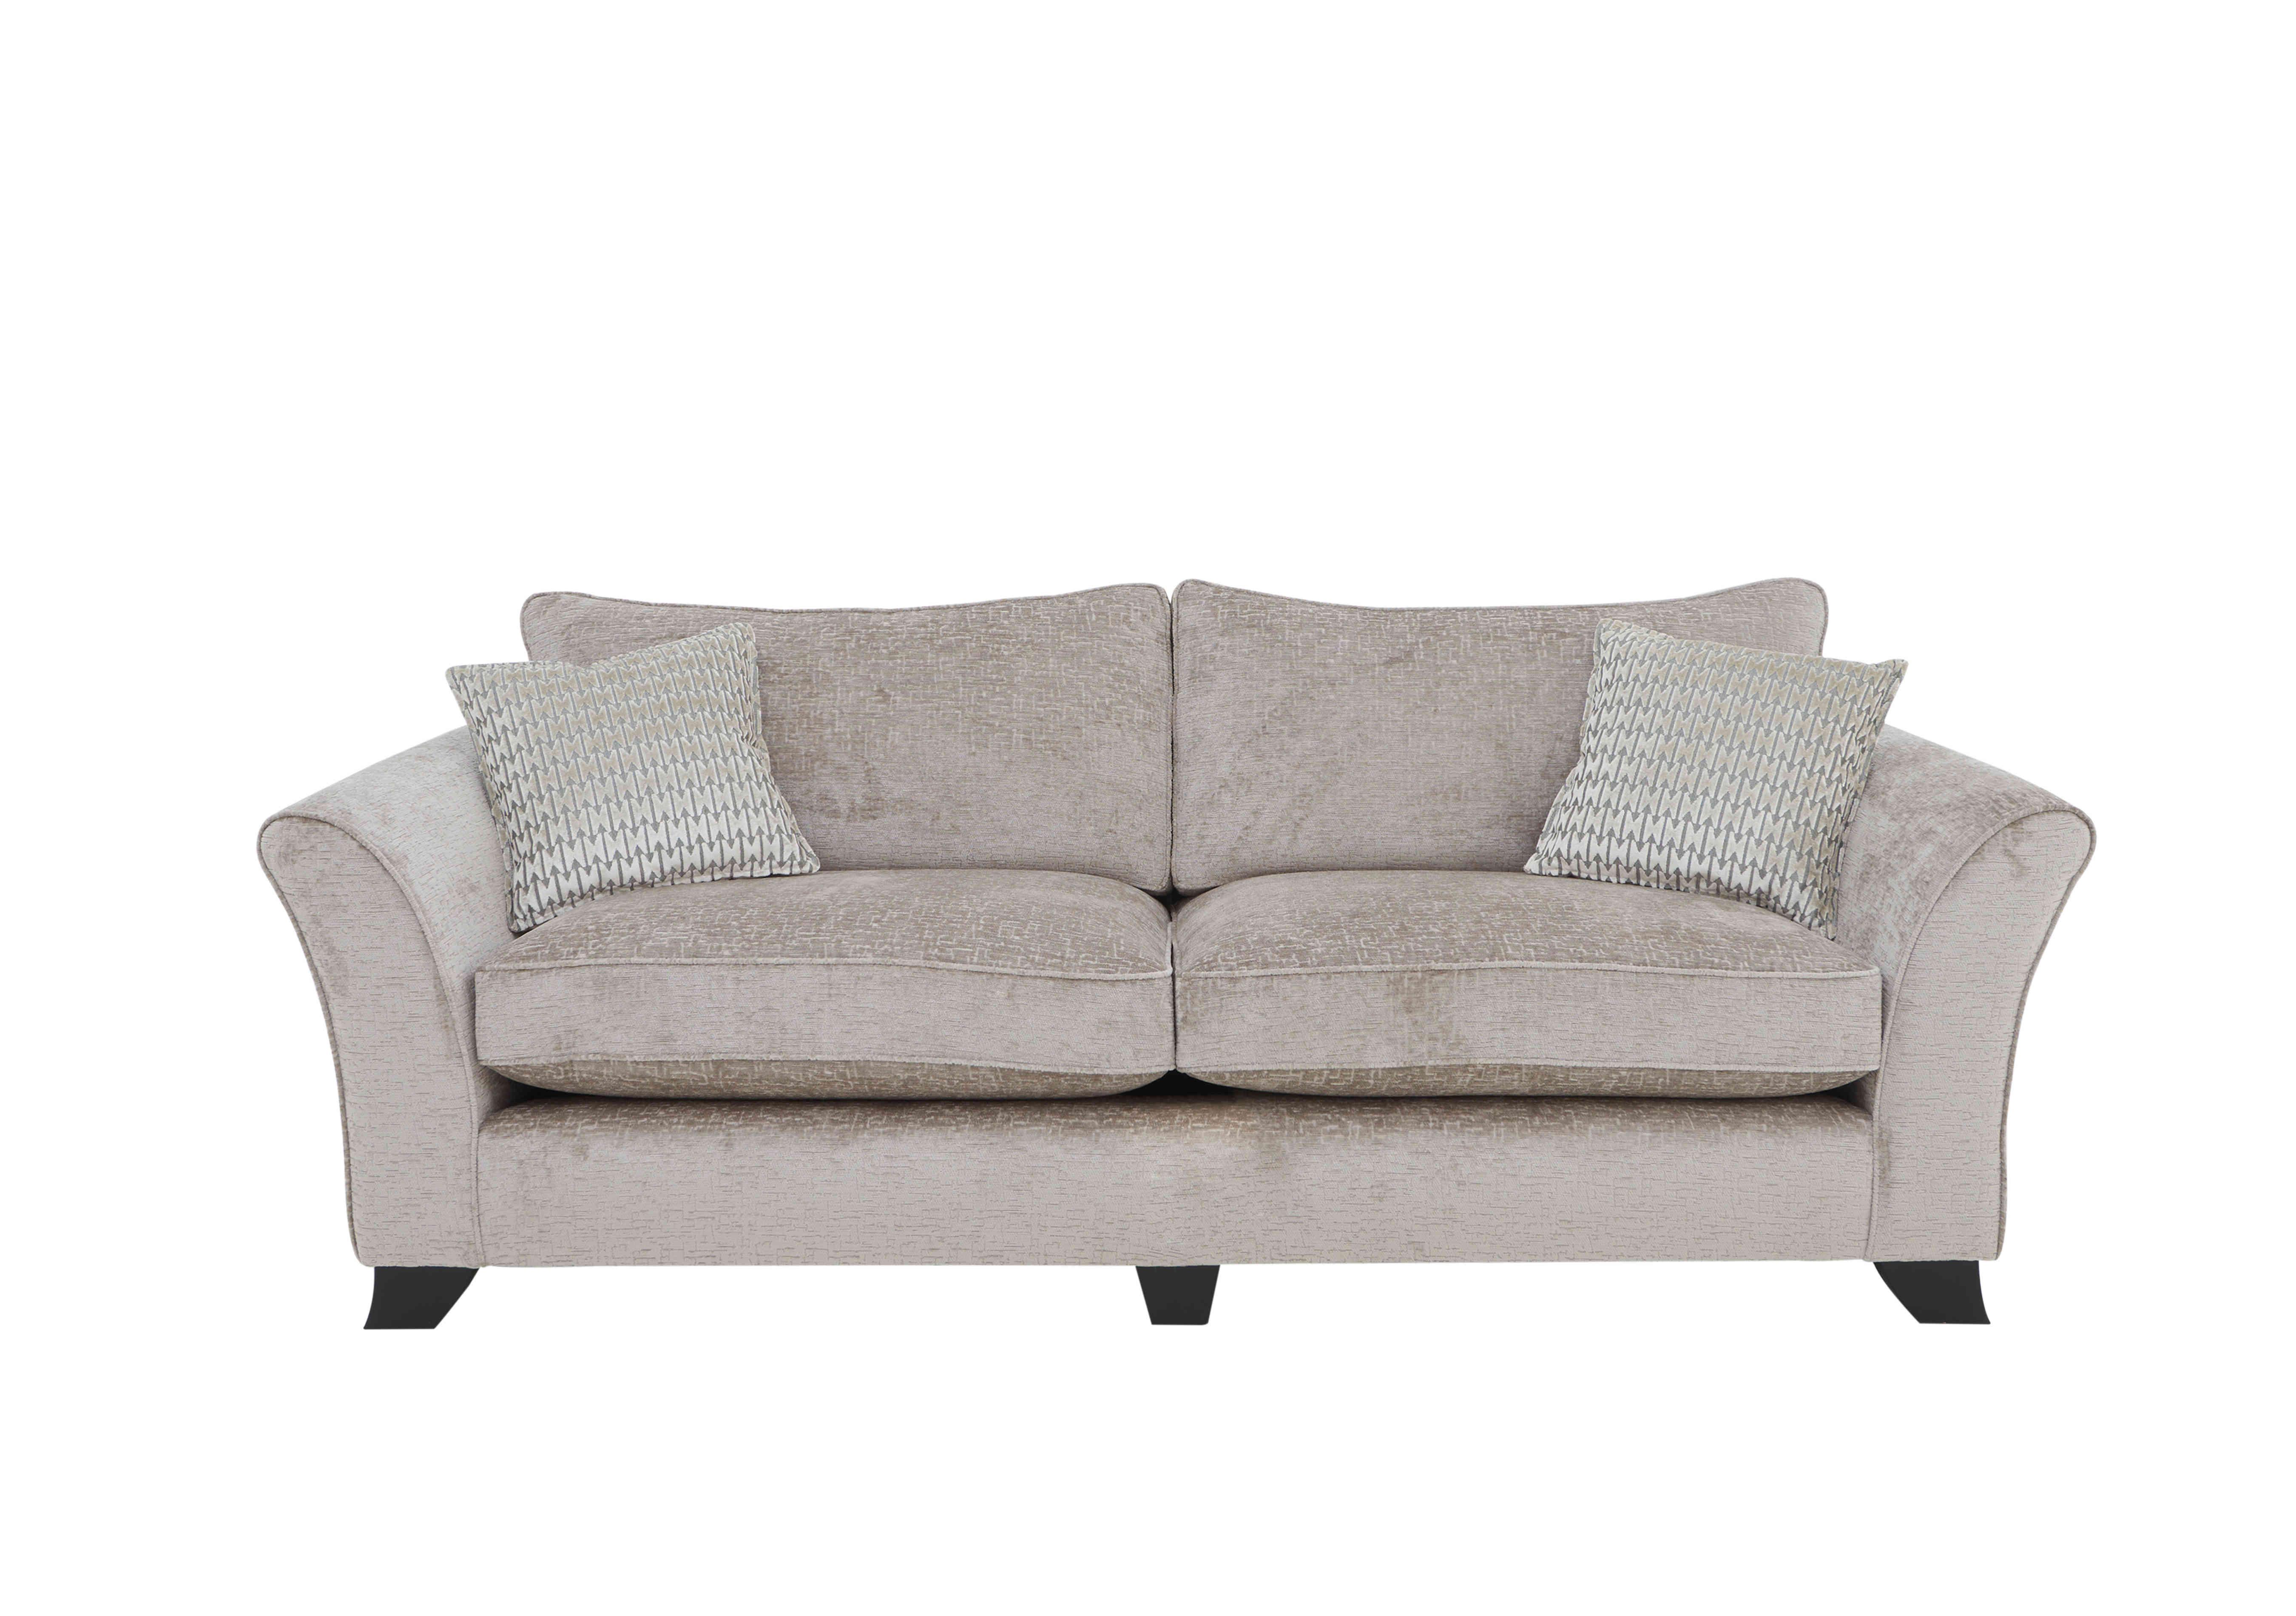 Sasha 4 Seater Classic Back Sofa in Alexandra Truffle on Furniture Village